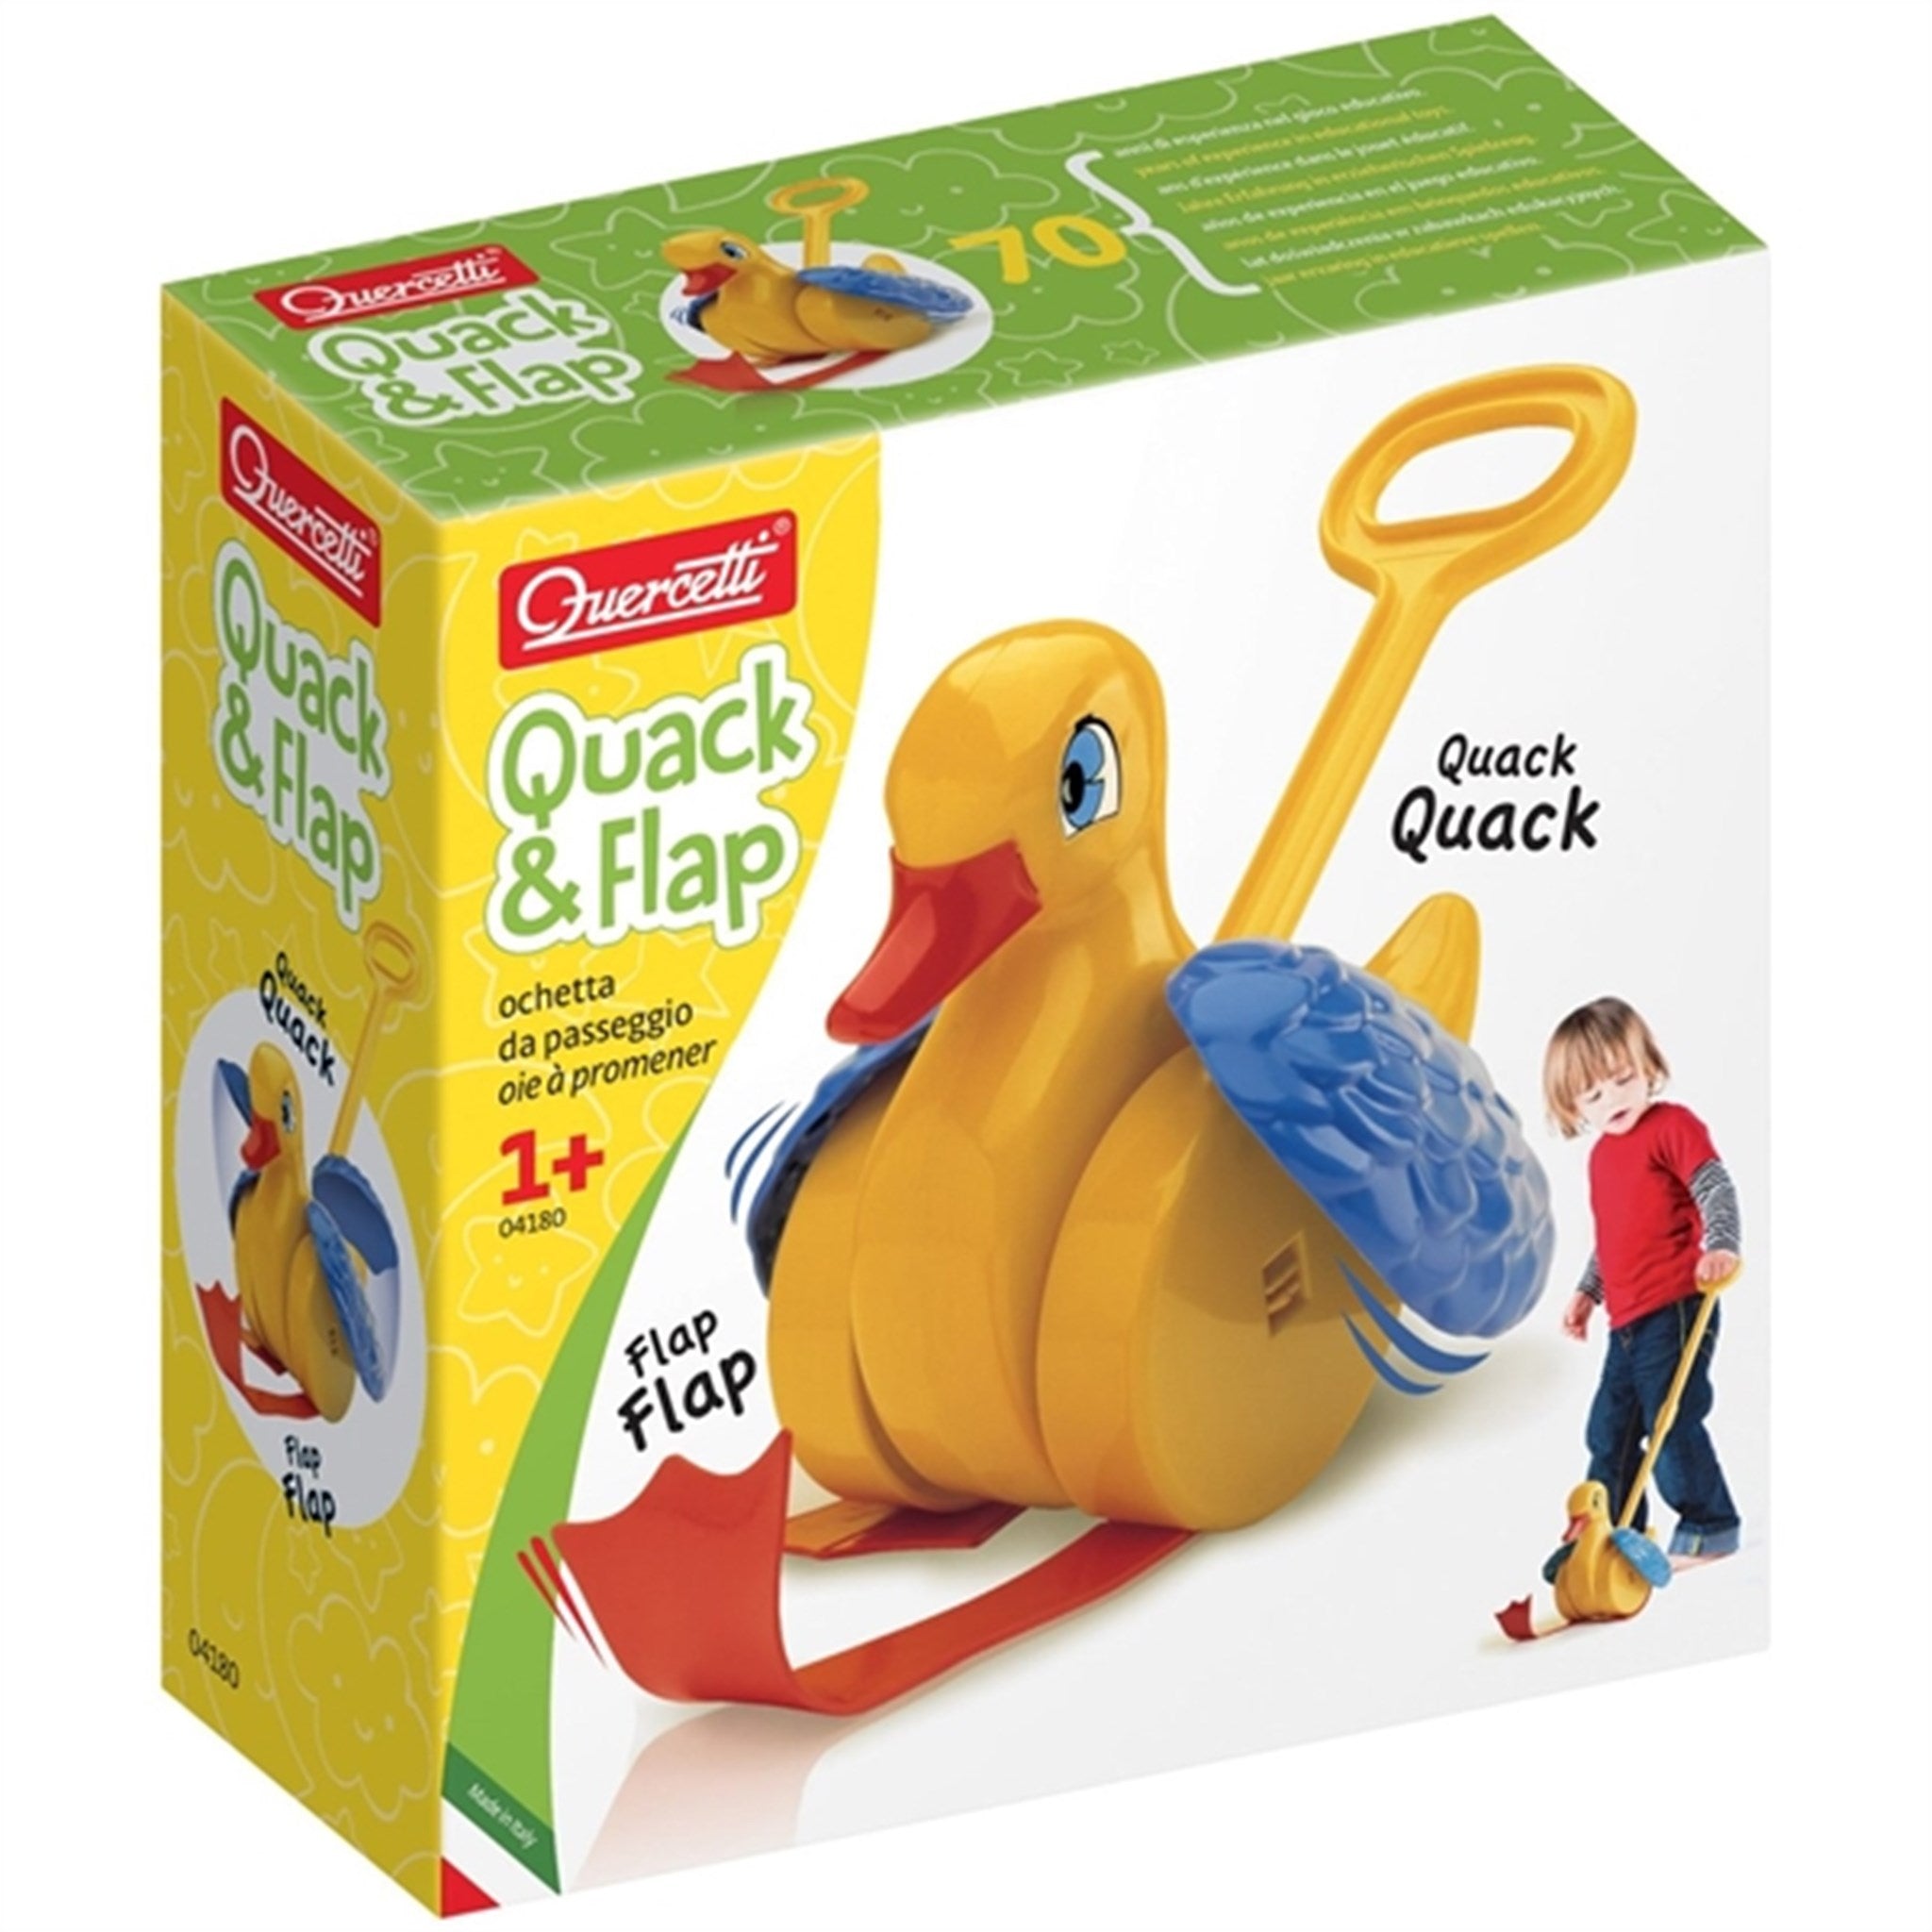 Quercetti Quack & Flap Push Animal: Duckling